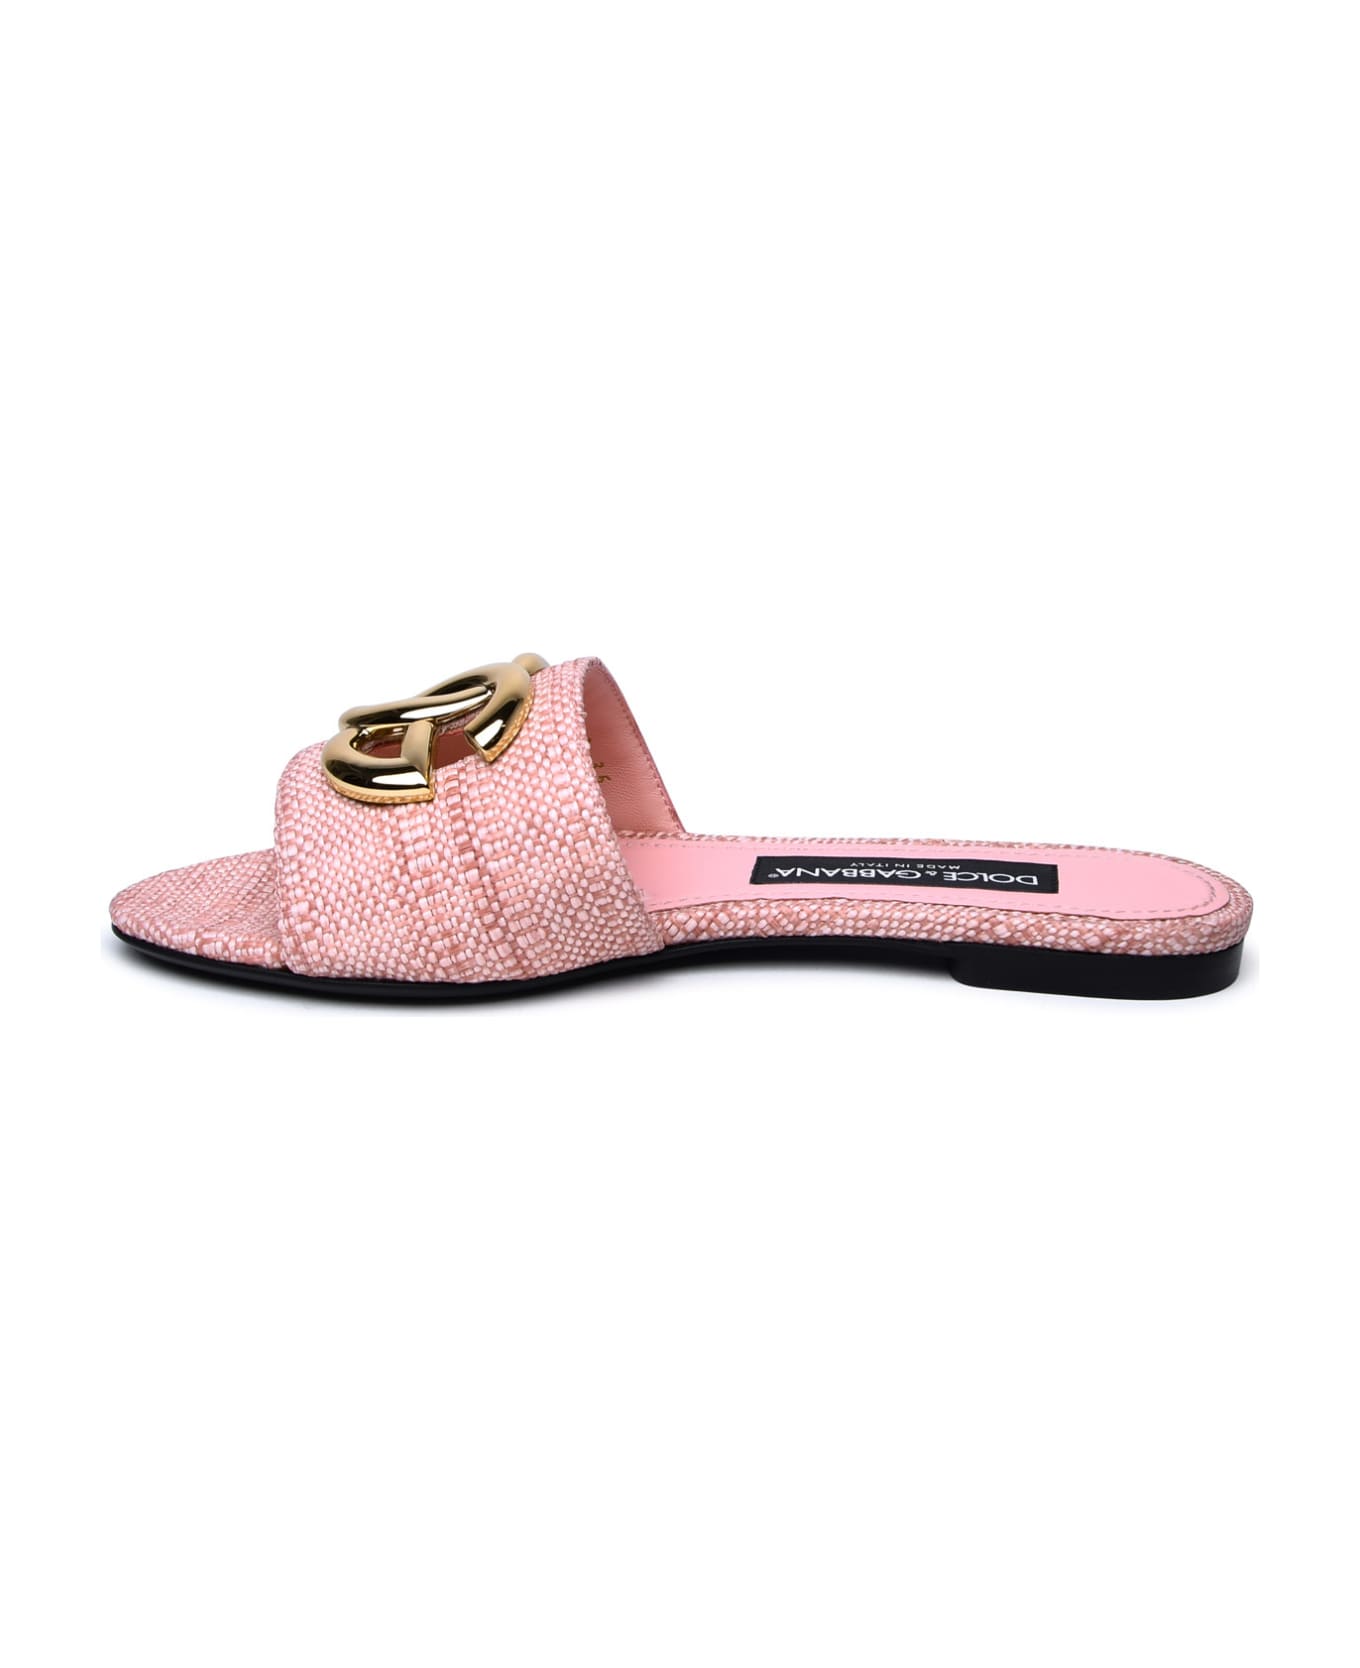 Dolce & Gabbana Pink Fabric Slippers - Pink サンダル